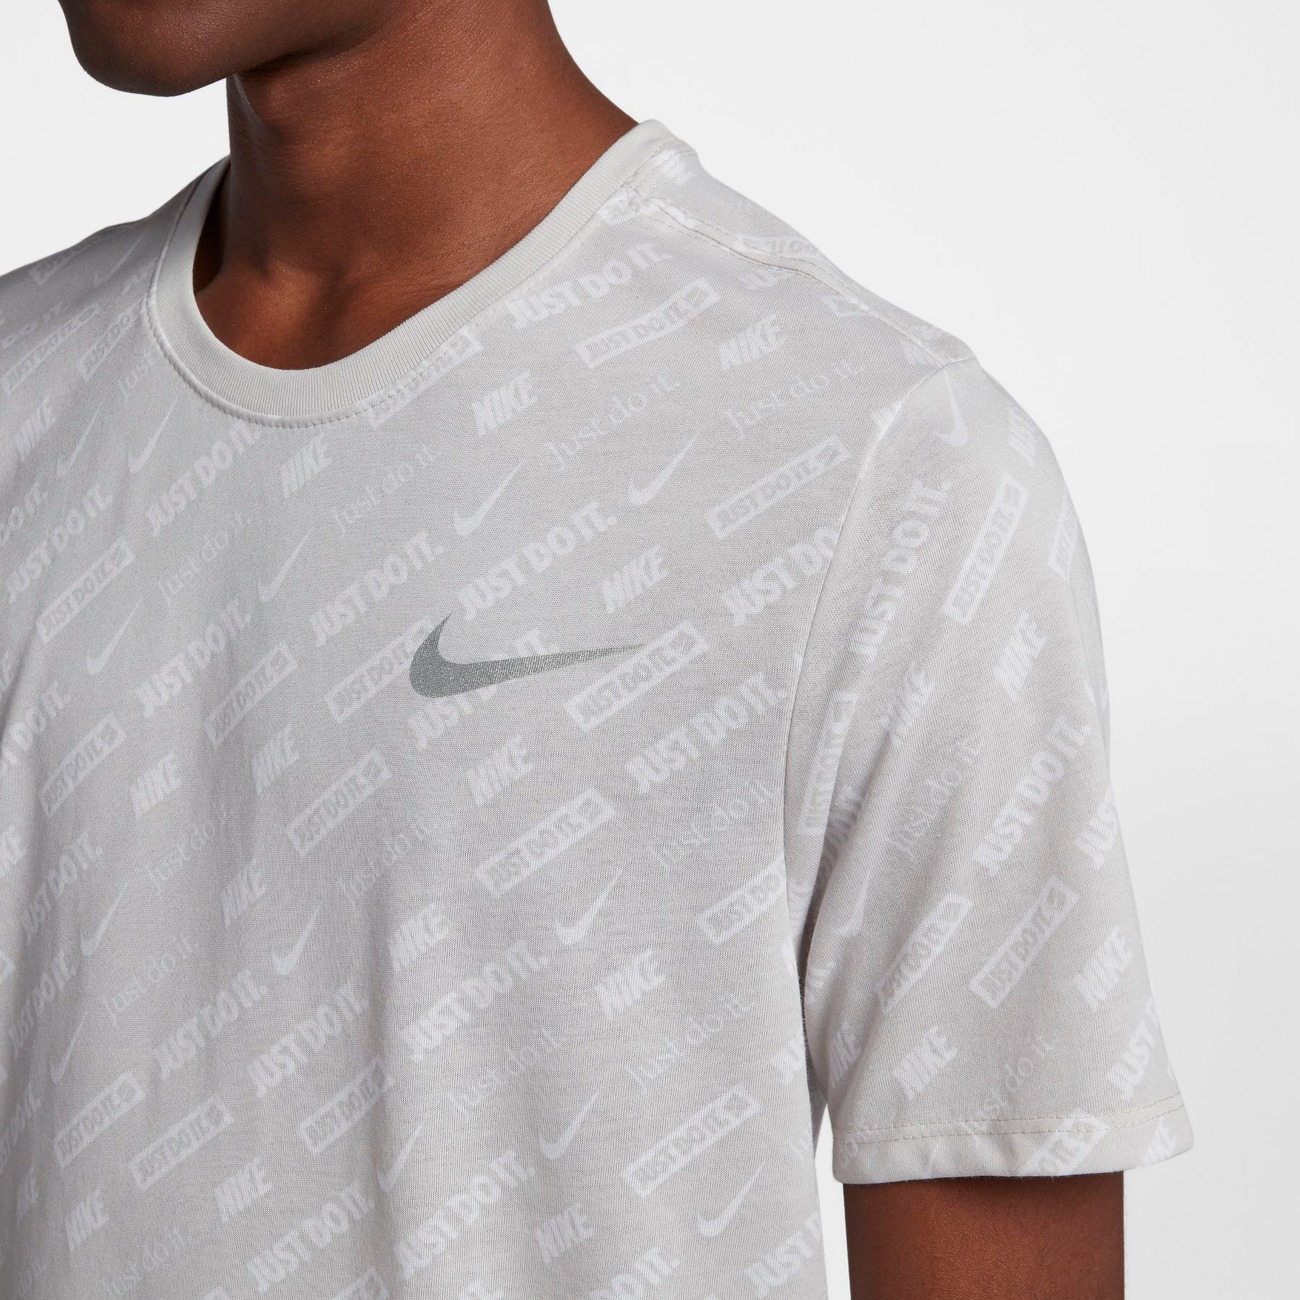 Camiseta Nike Dri-Fit Masculina - Foto 3